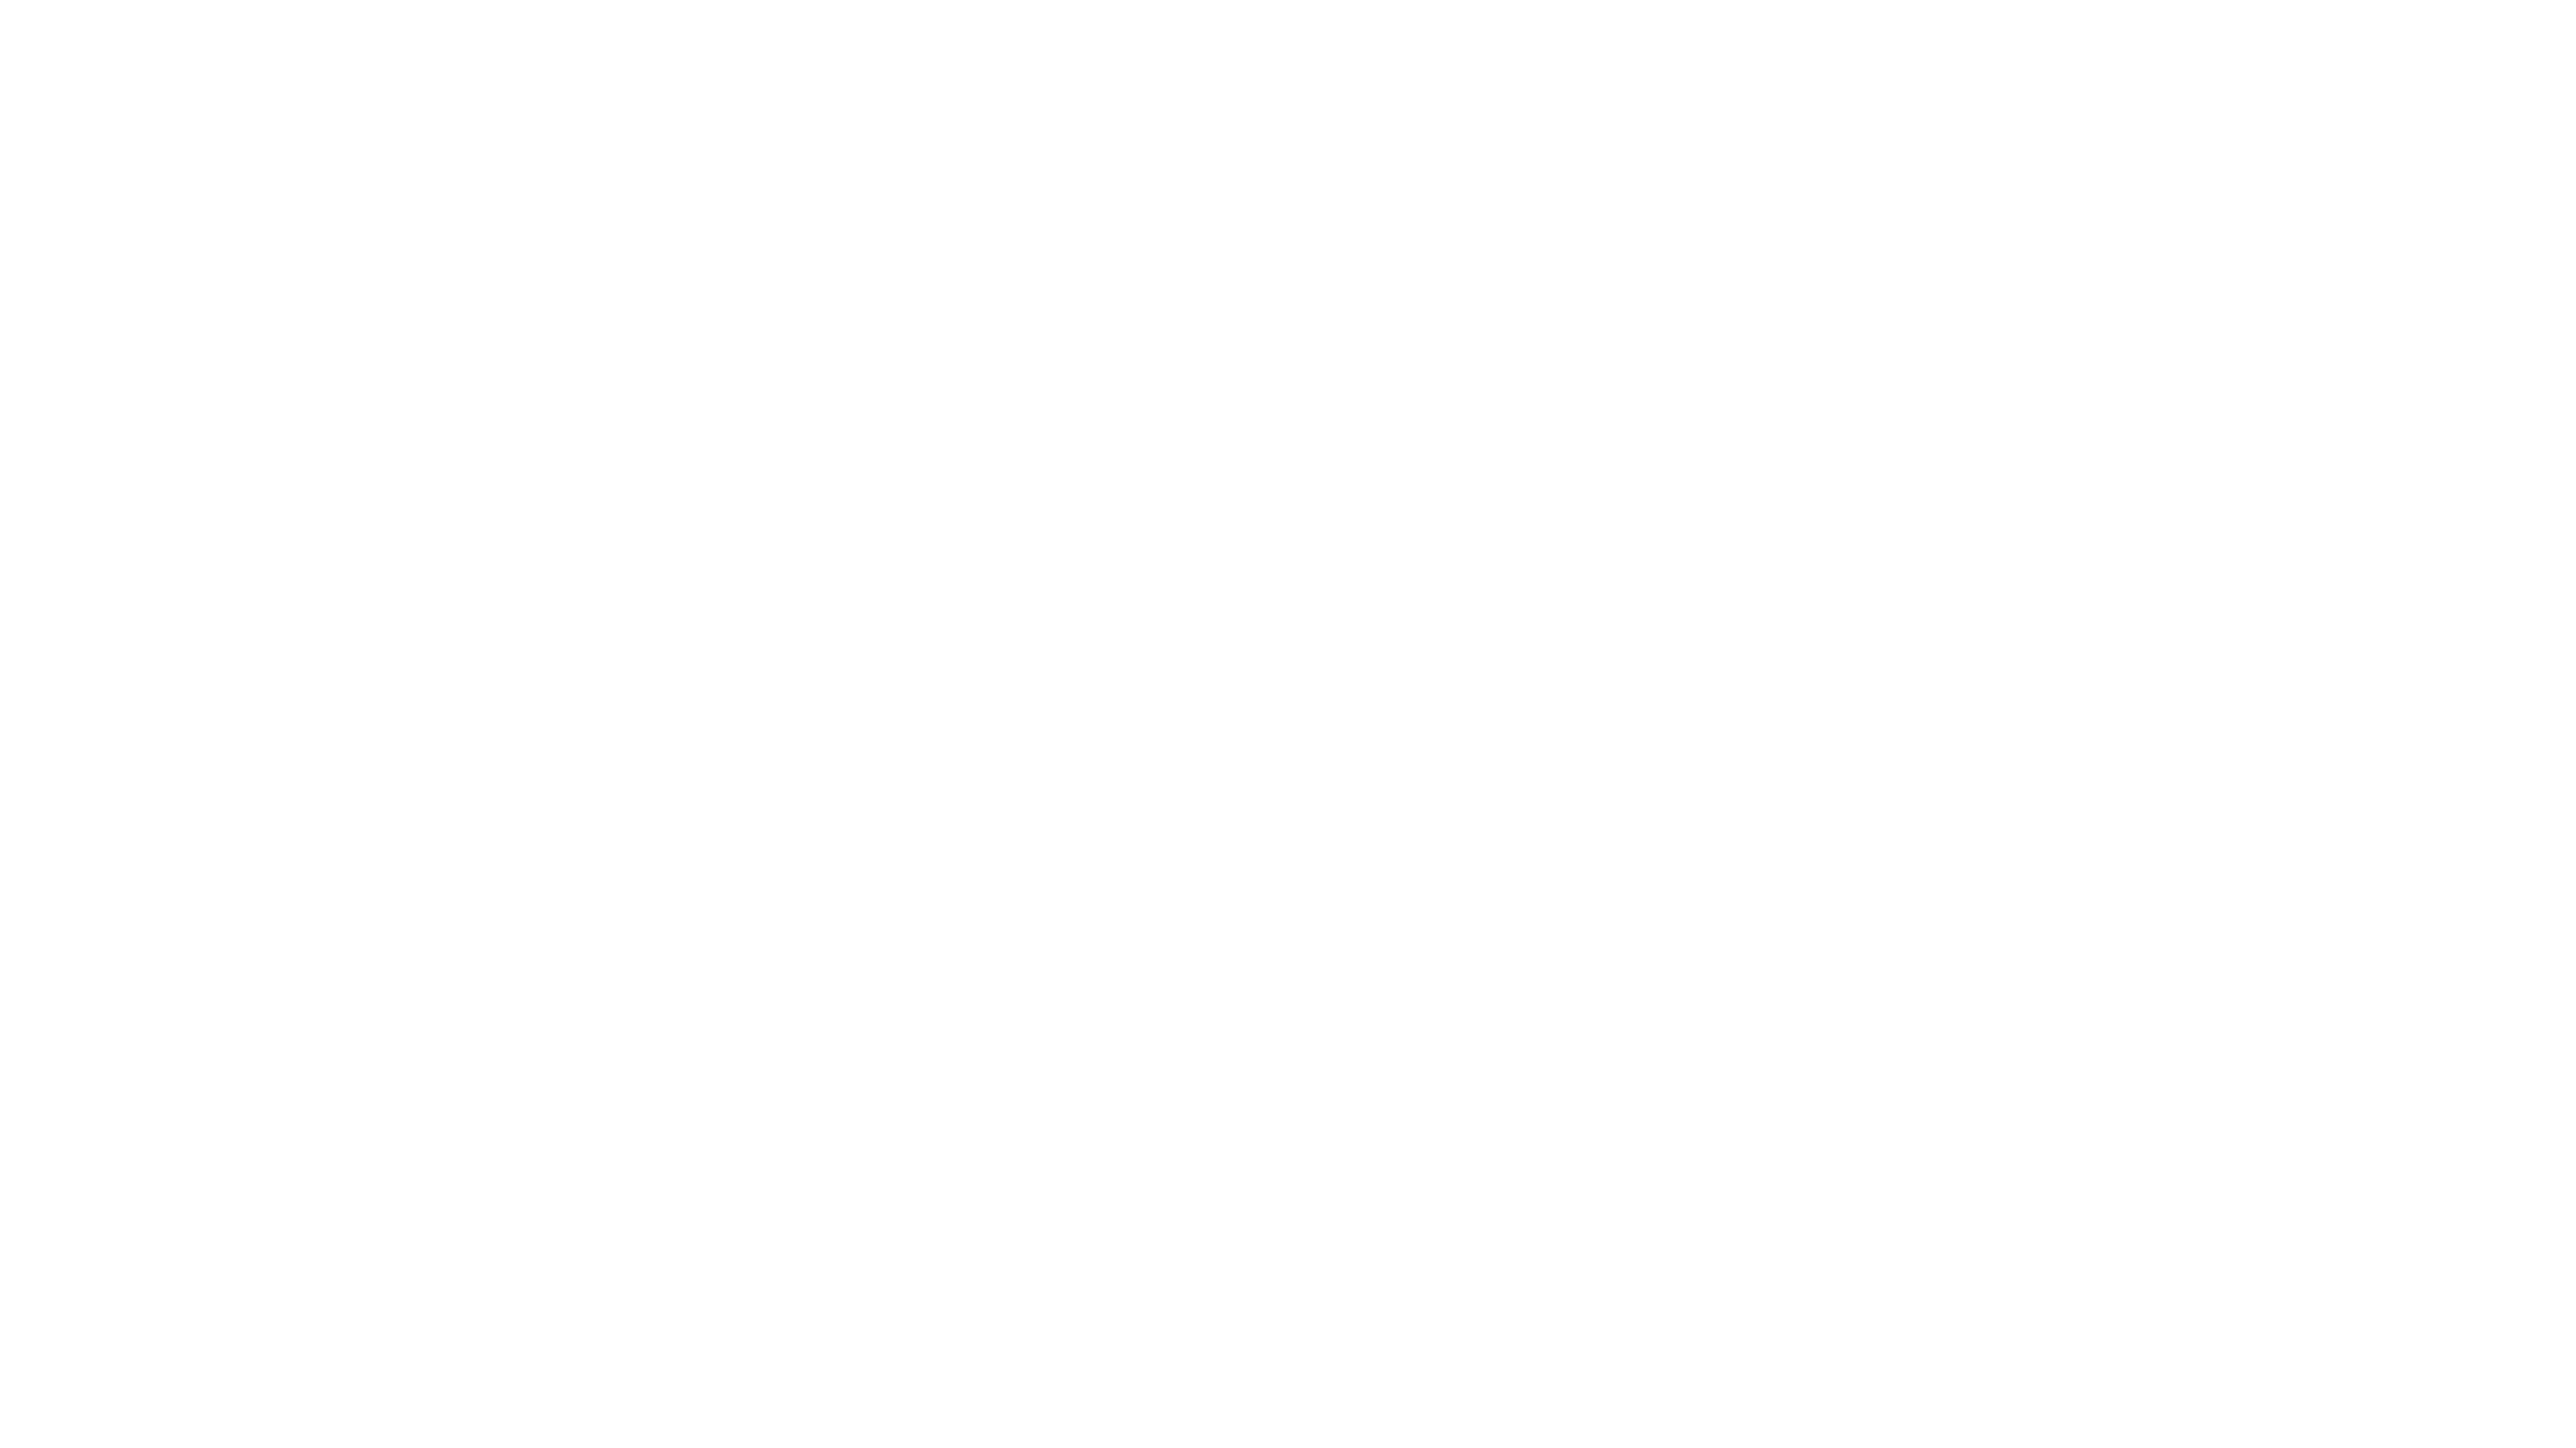 Ariel Alternatives Sponsor Logo for Navy Pier Expierience Gala